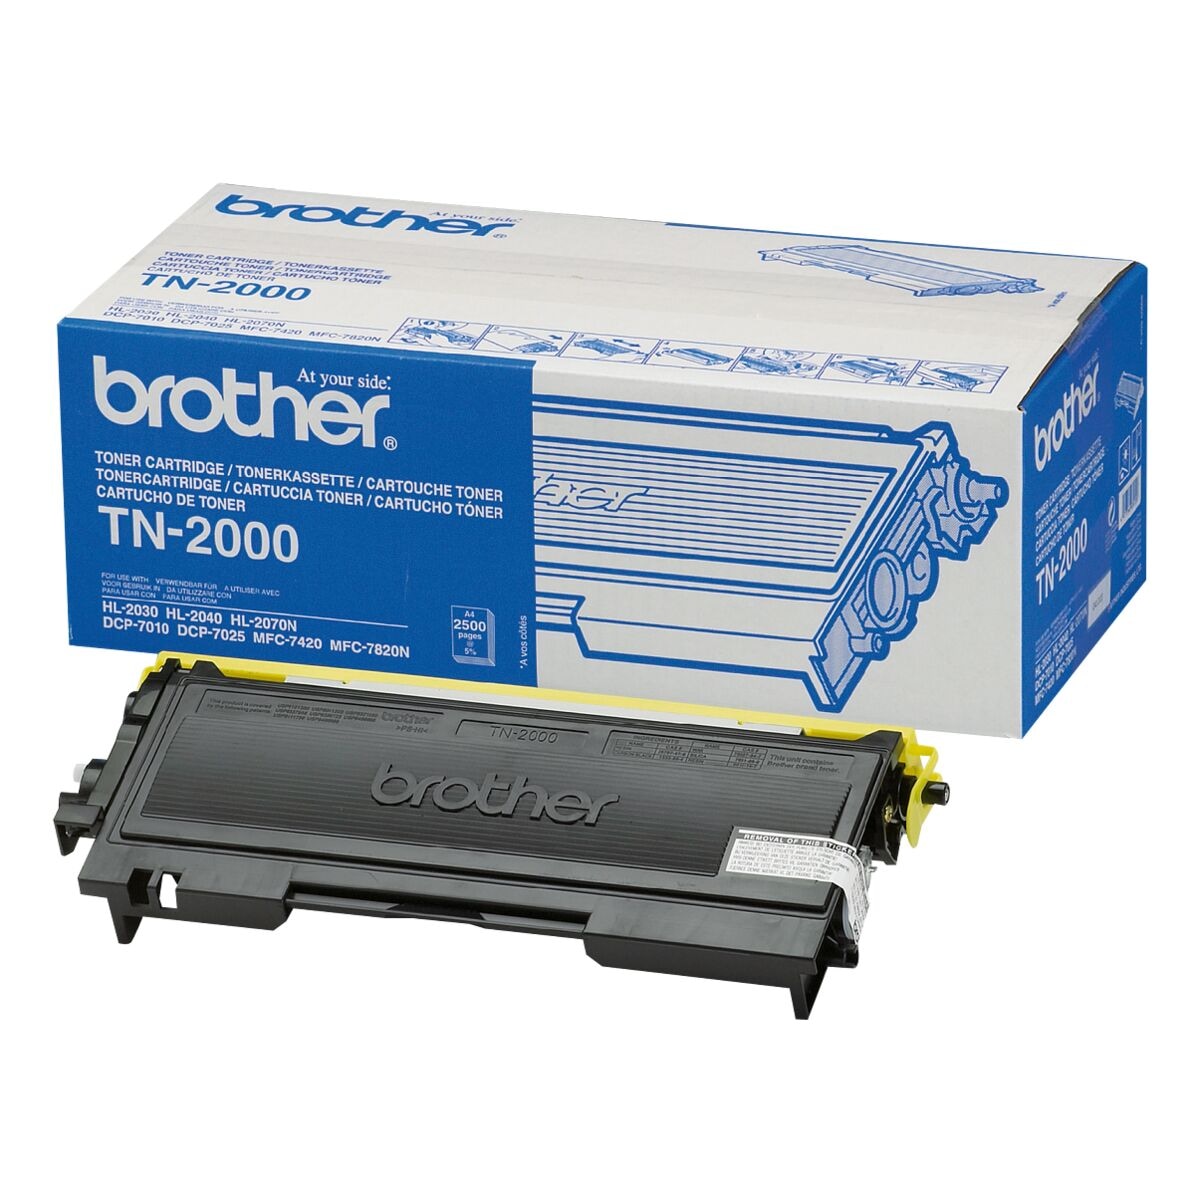 Принтер бротхер тонер. Brother hl 2030r картридж. Тонер для бротхер 2500. Бразер hl2030. Тонер для принтера brother ut19b2.